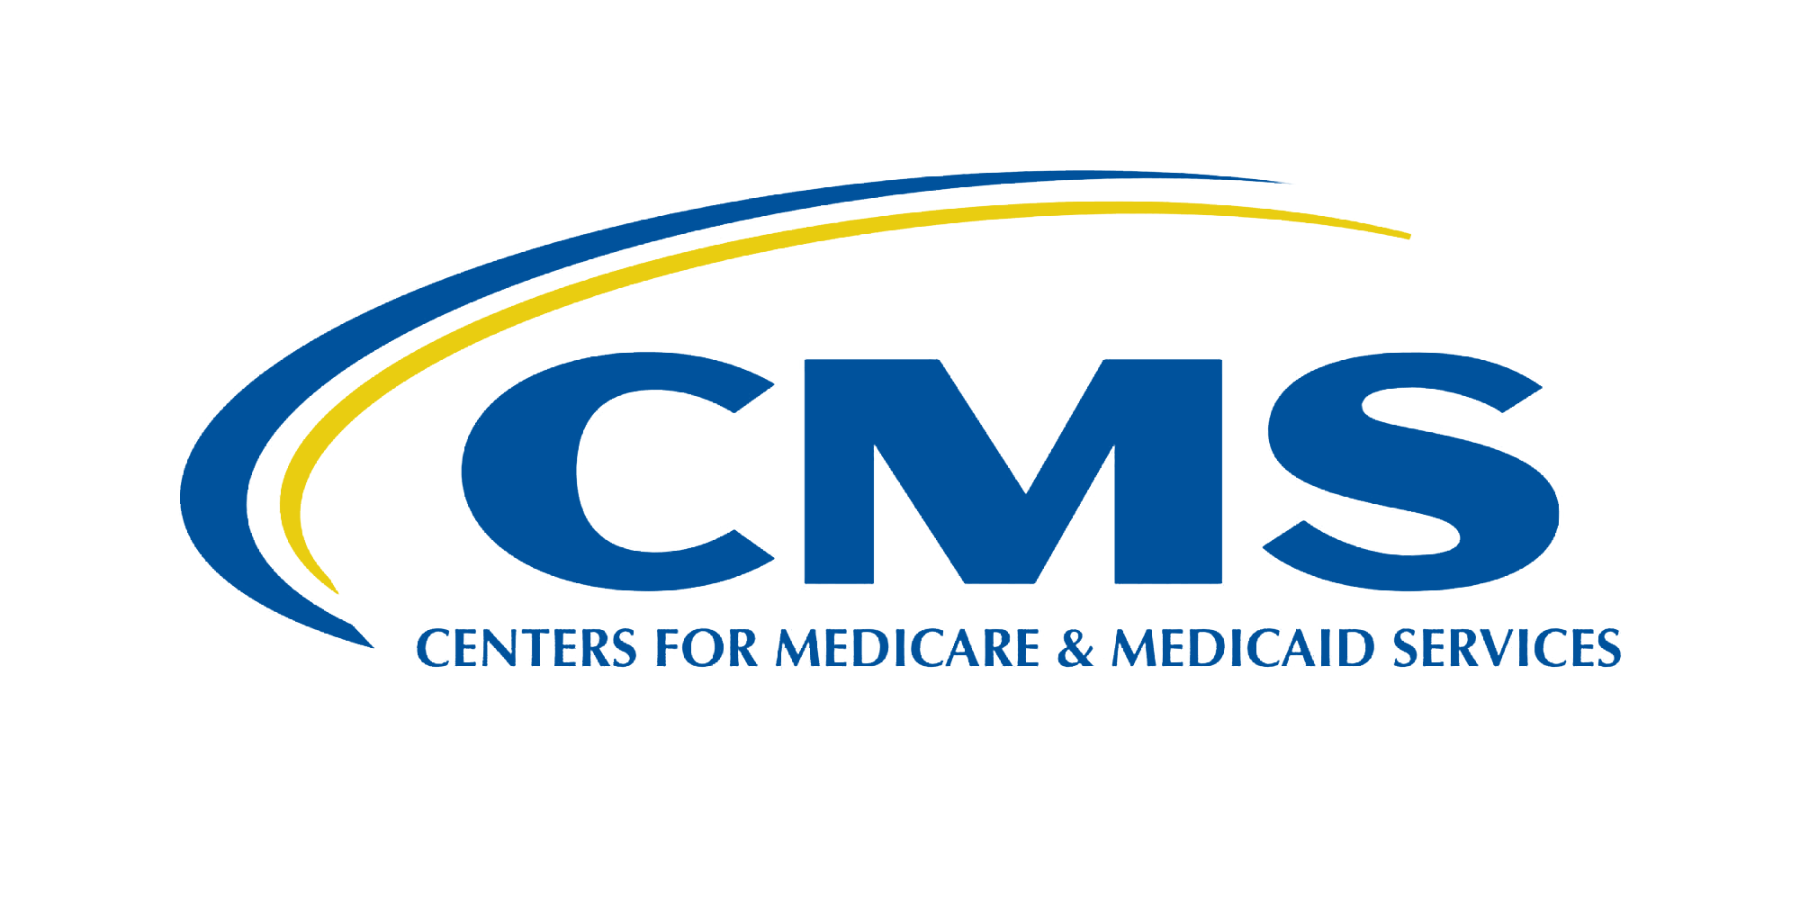 CMS boosts reimbursement for COVID-19 vaccine administration